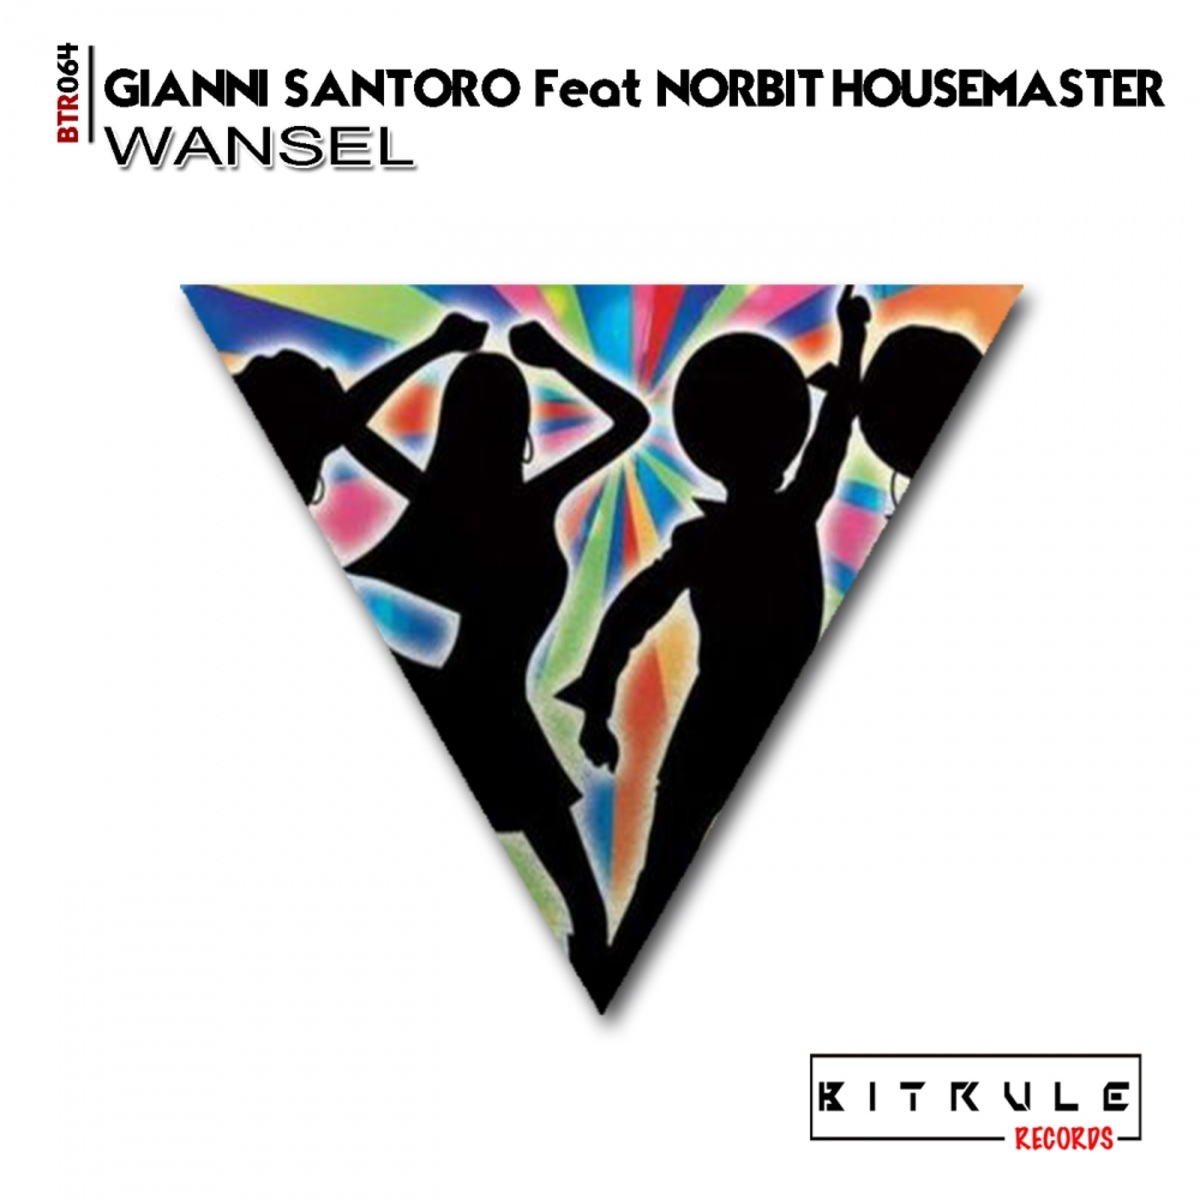 Gianni Santoro ft Norbit Housemaster - Wansel / Bit Rule Records